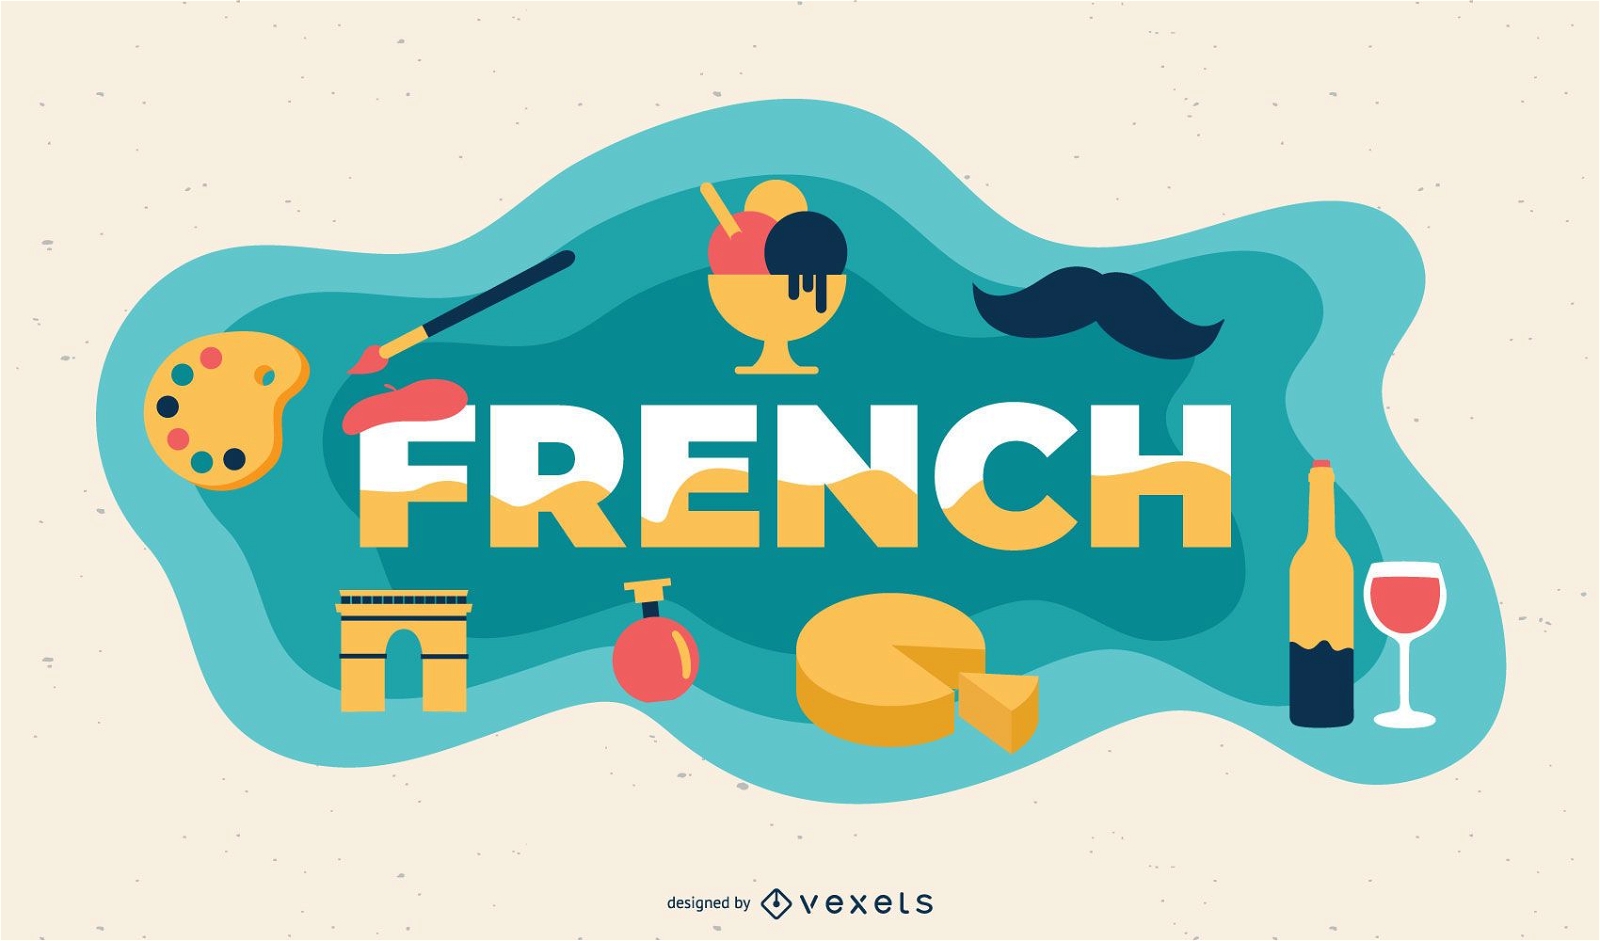 French subject illustration